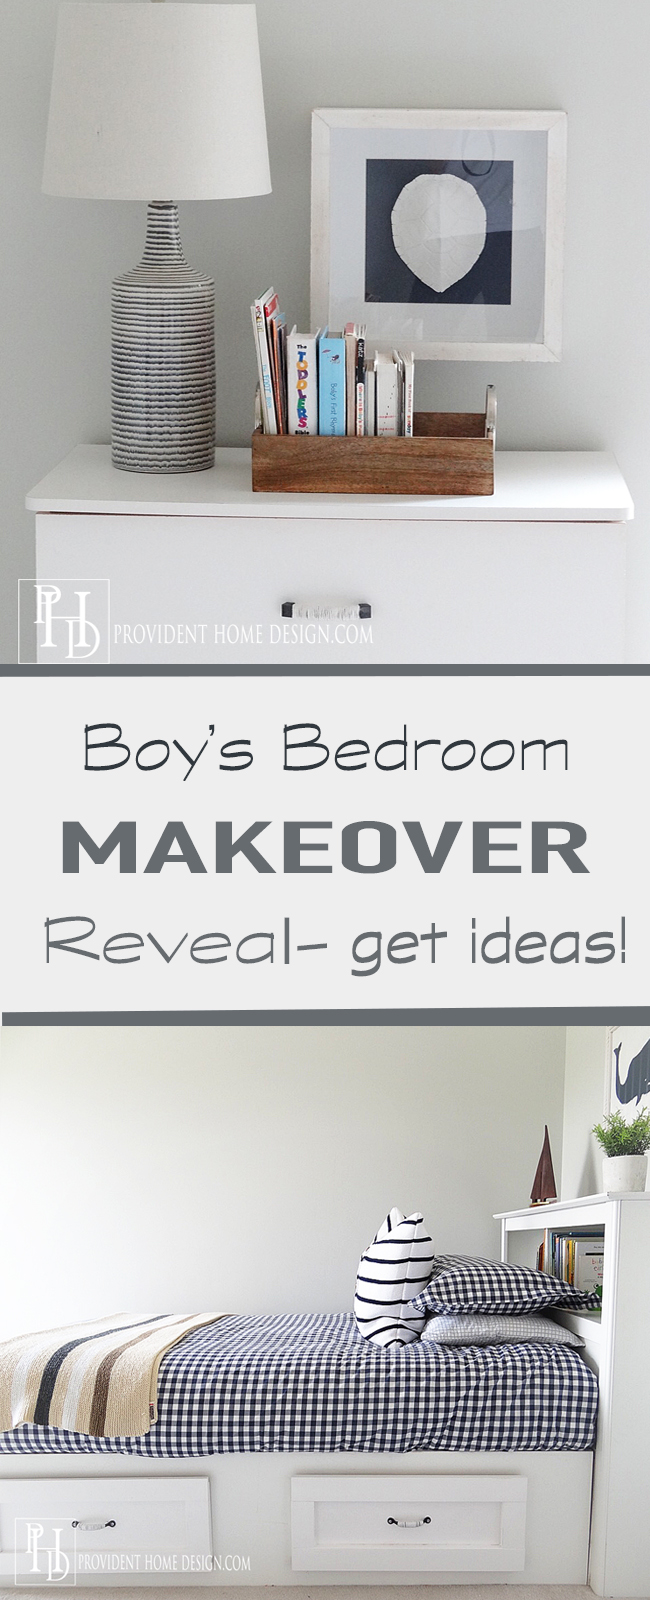 Boy's Bedroom Makeover Reveal!